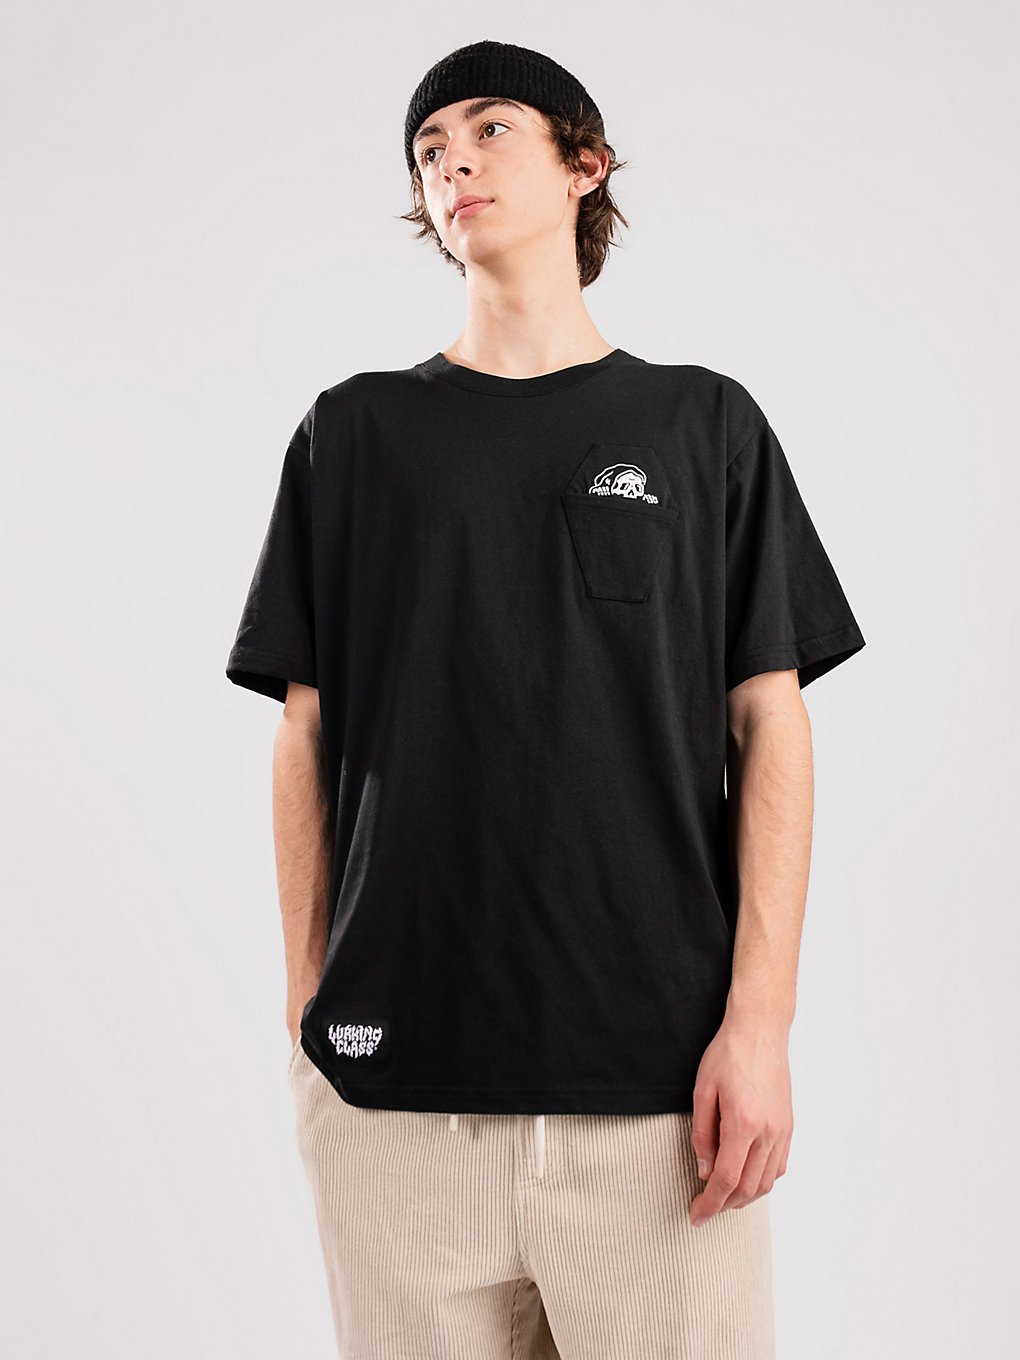 Lurking Class Coffin Pocket T-Shirt black kaufen